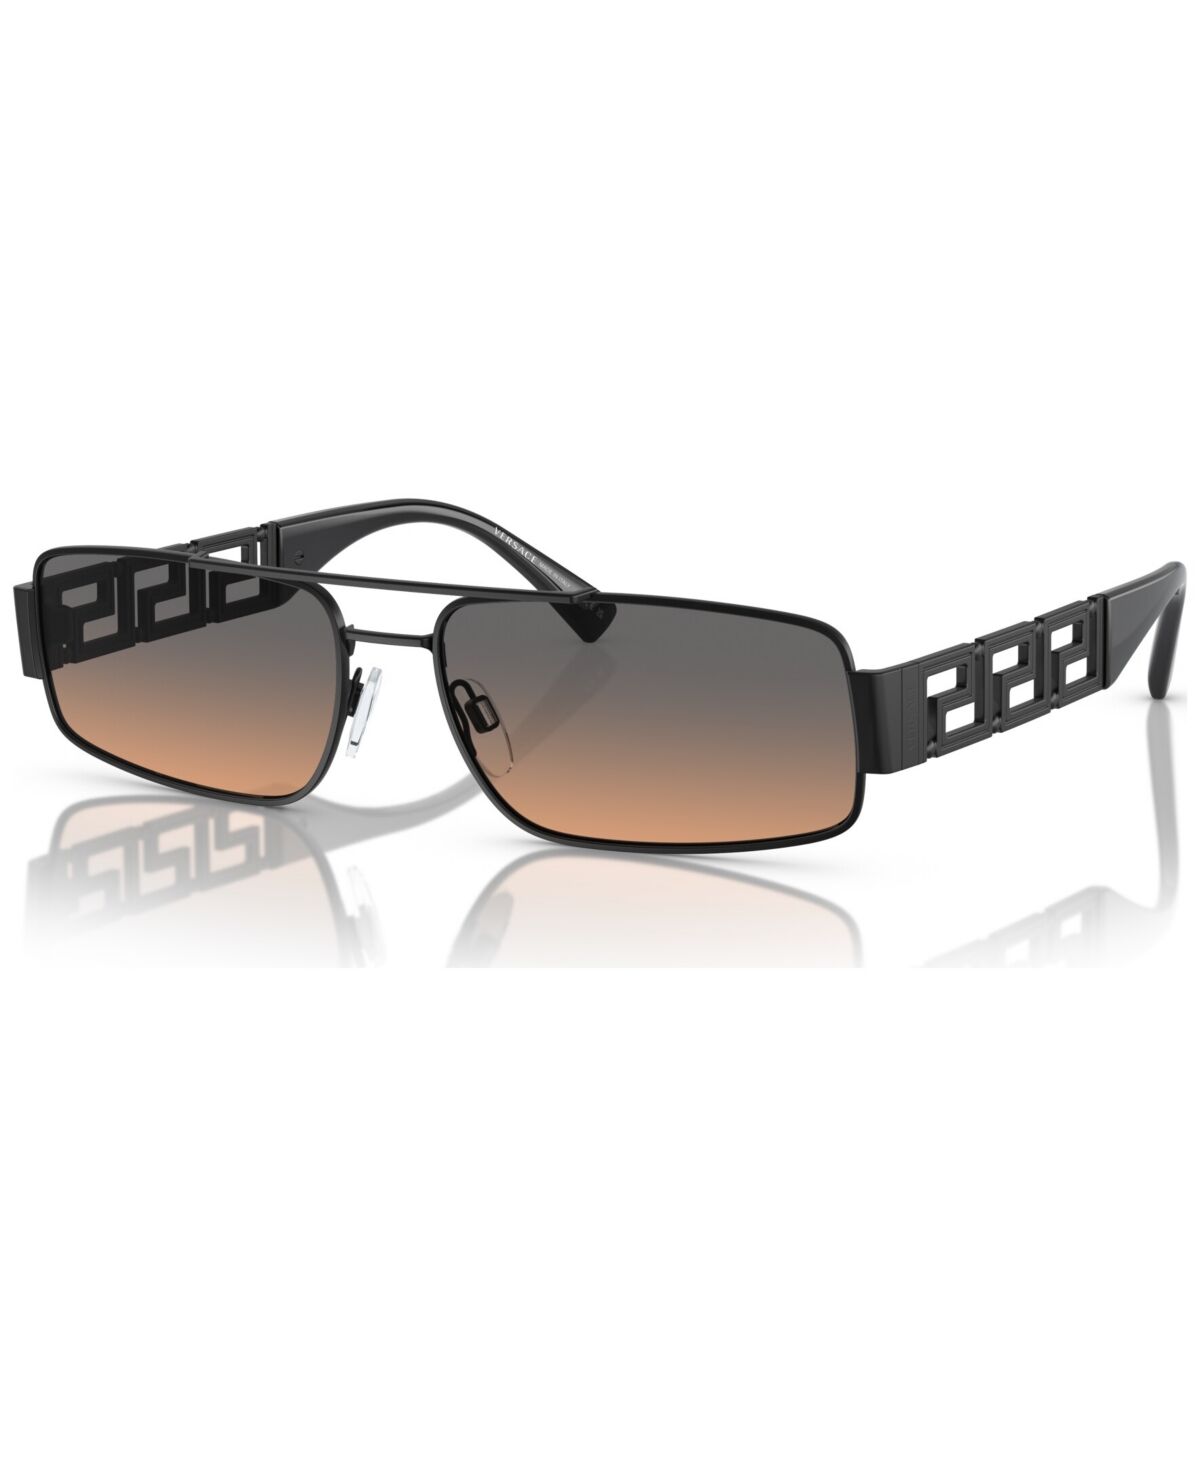 Versace Men's Sunglasses, VE2257 - Matte Black/Gradient